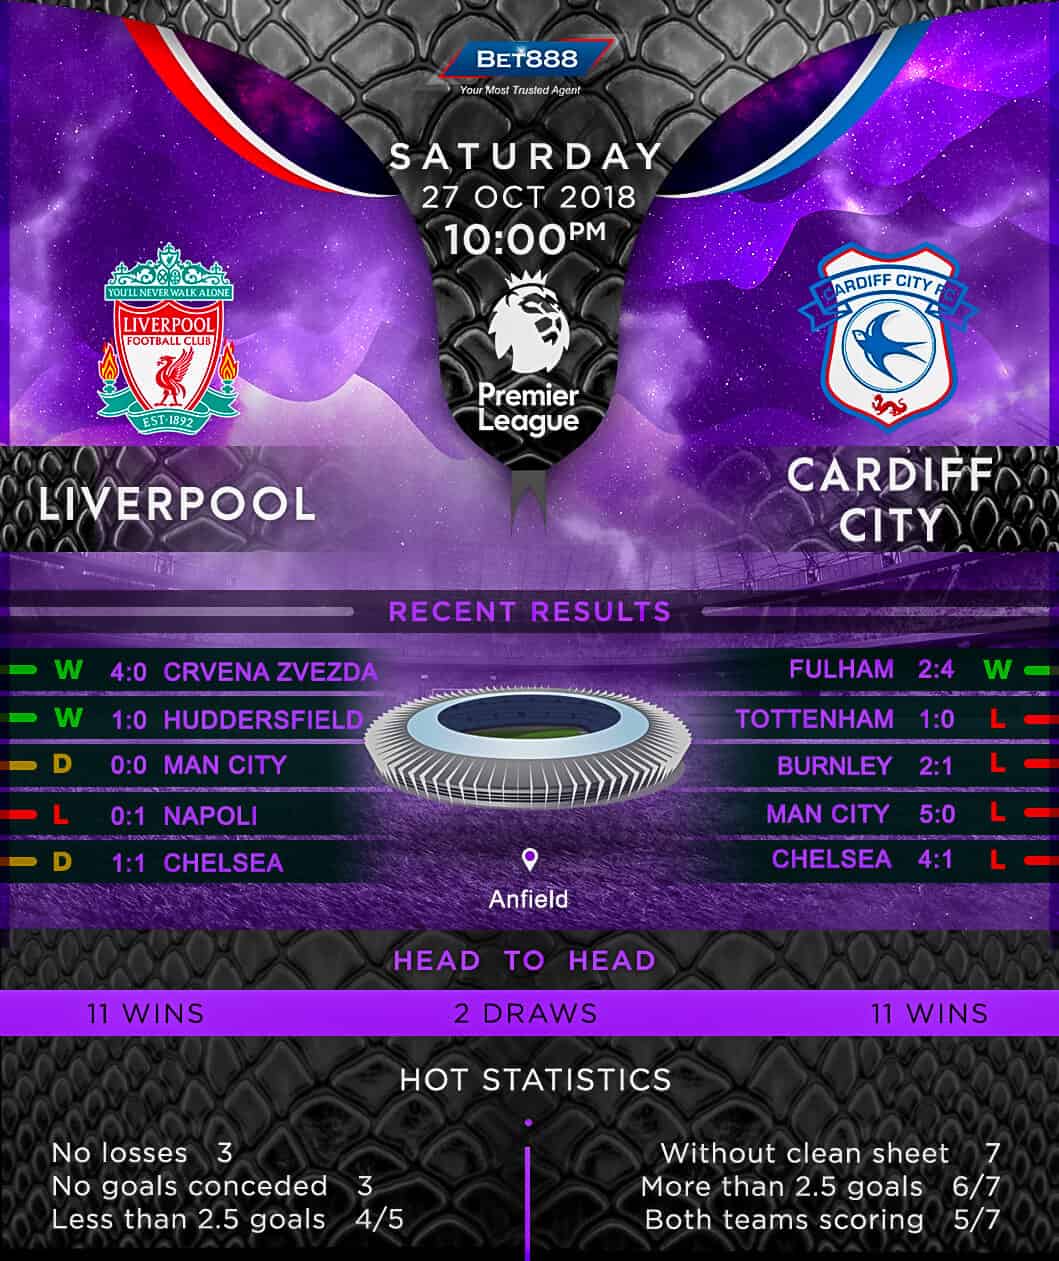 Liverpool vs Cardiff City 27/10/18